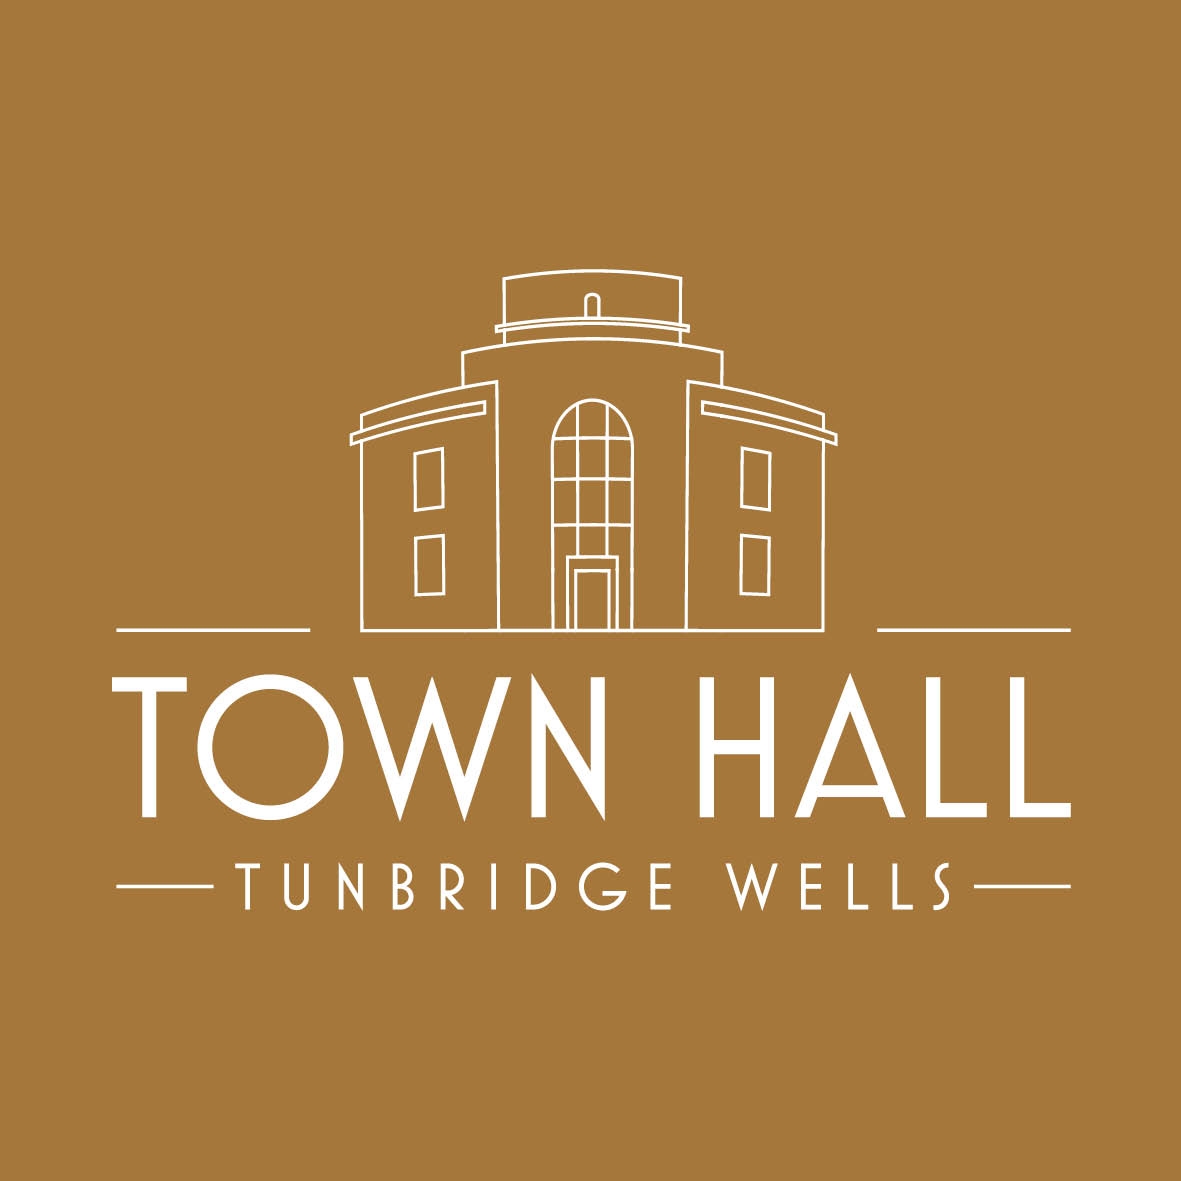 TOWN HALL logo